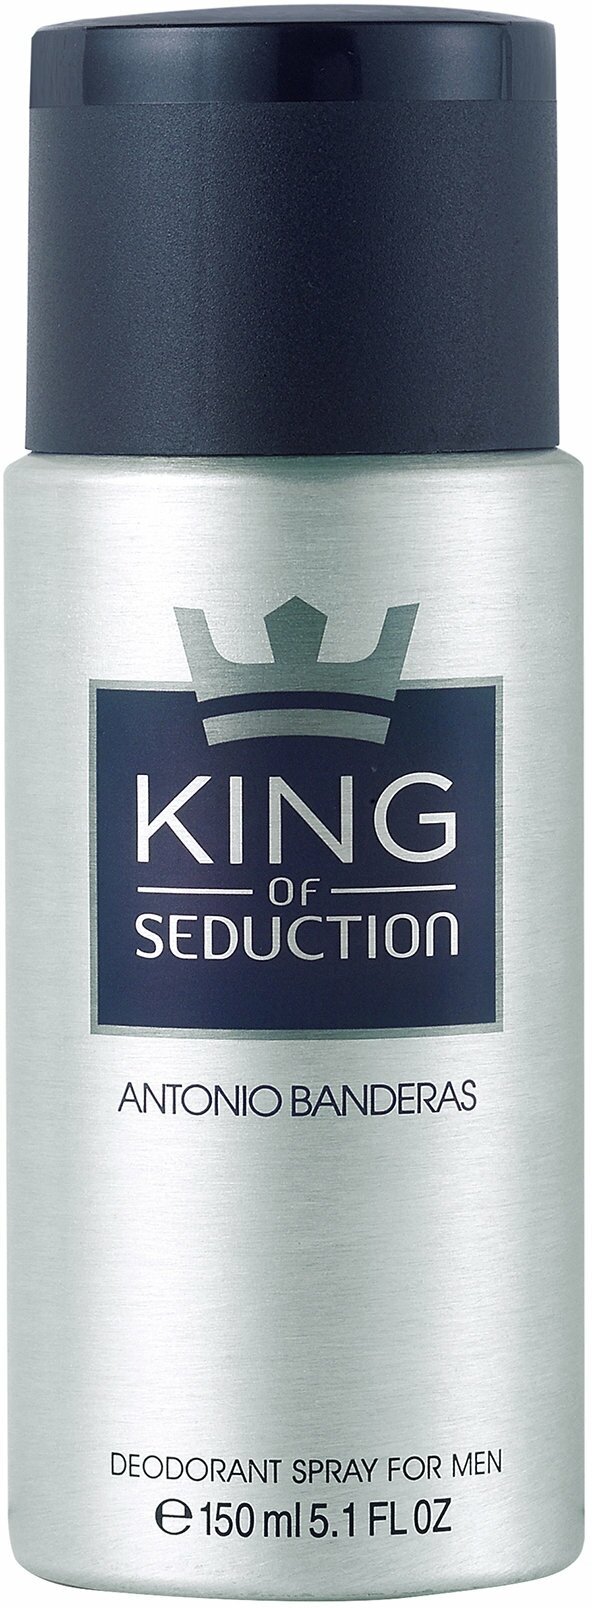 Дезодорант Antonio Banderas King of Seduction Deodorant Spray /150 мл/гр.